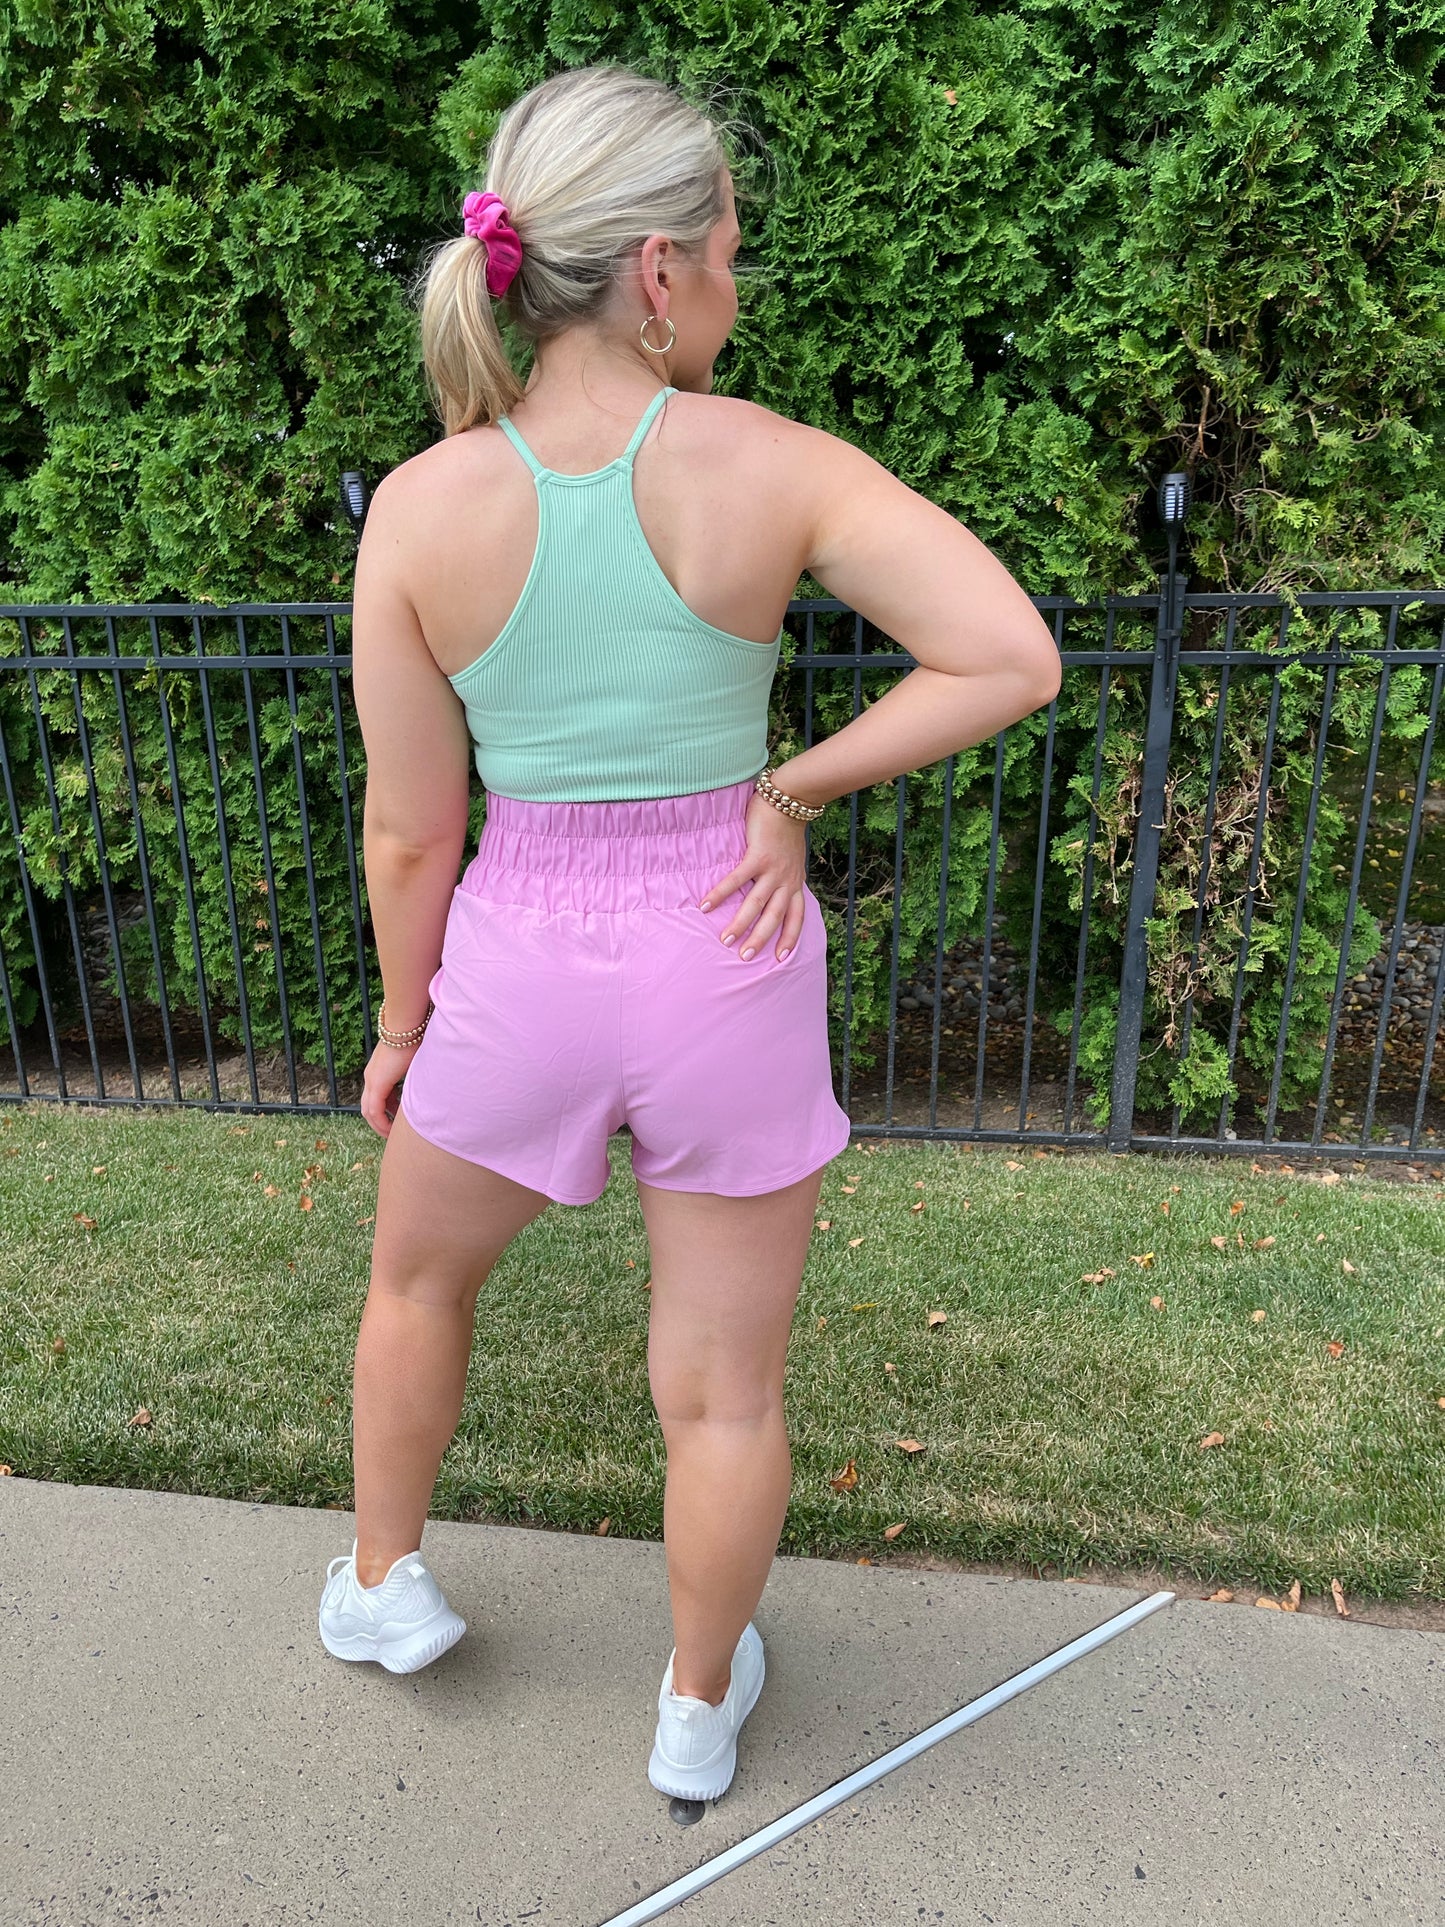 Pink Athletic Shorts